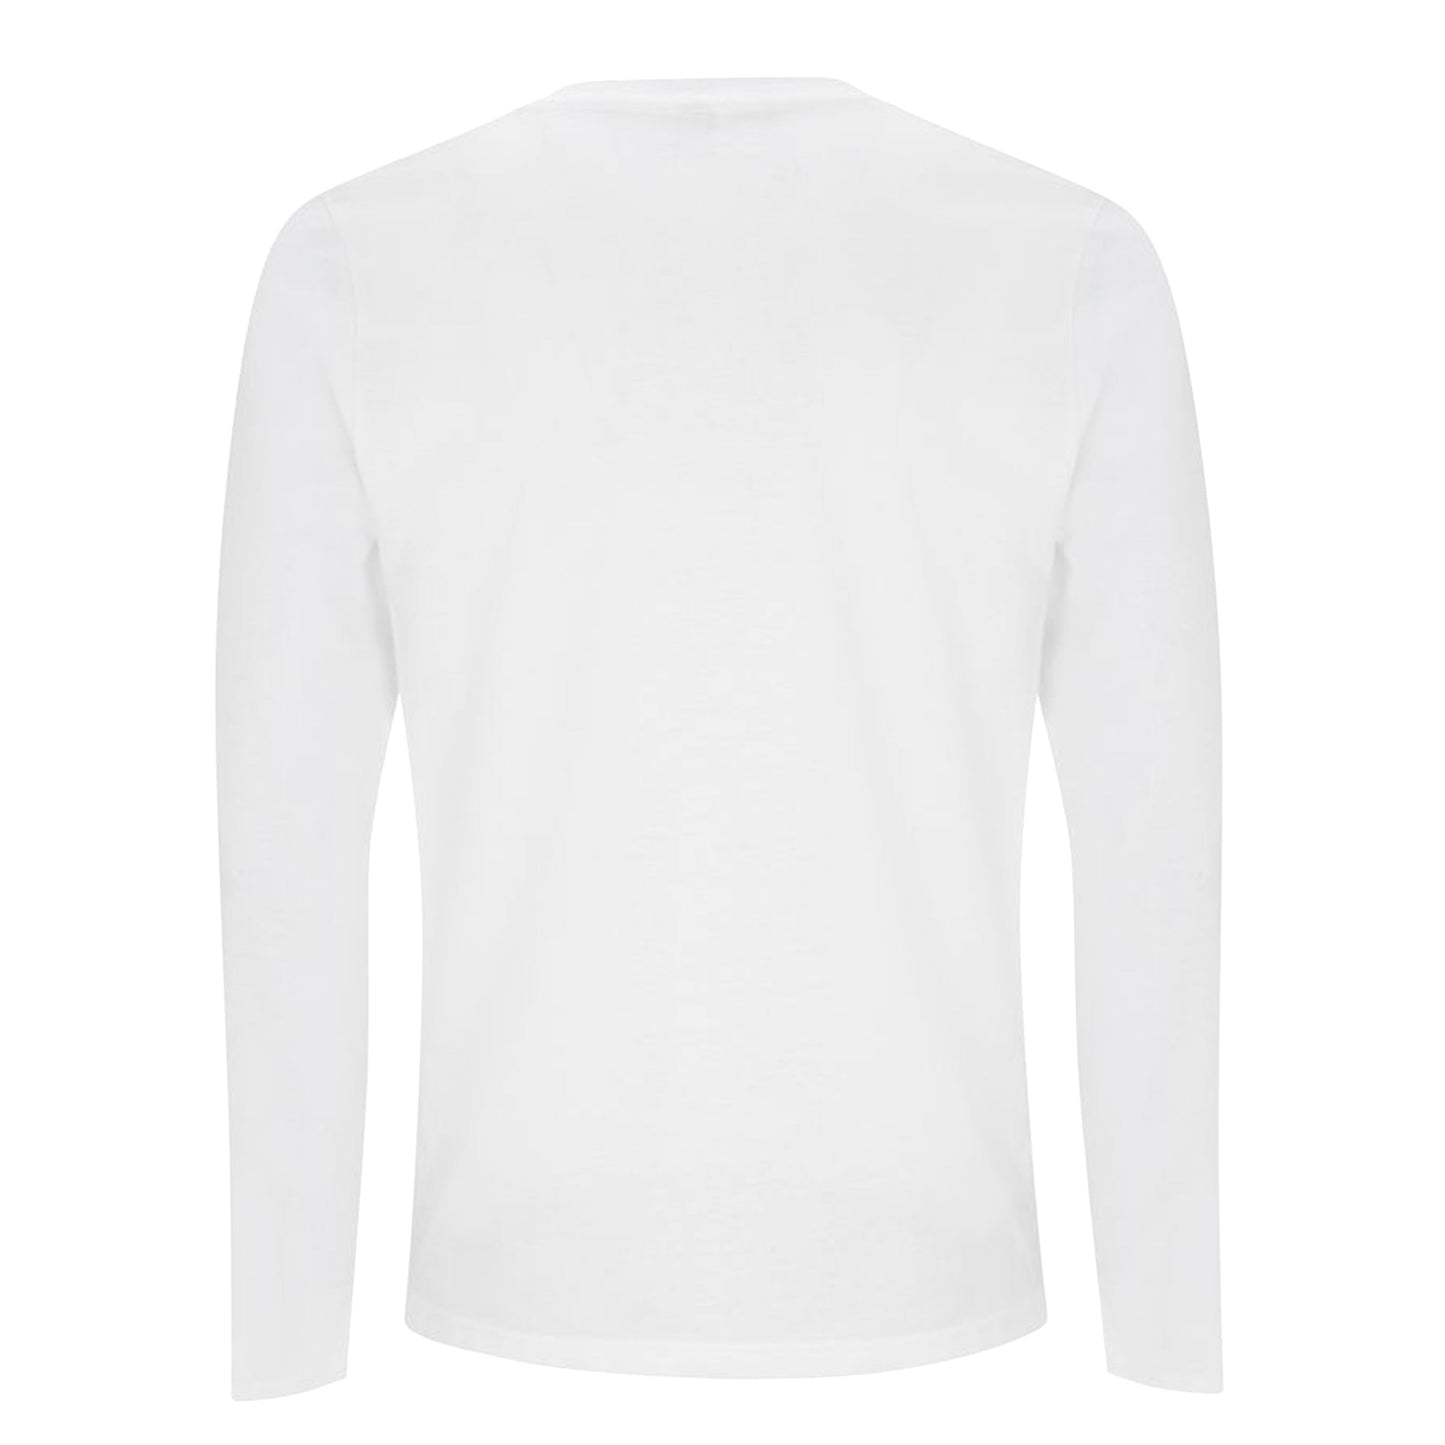 'Everything Is Fine' Long sleeve T-Shirt (White) - Deth Kult